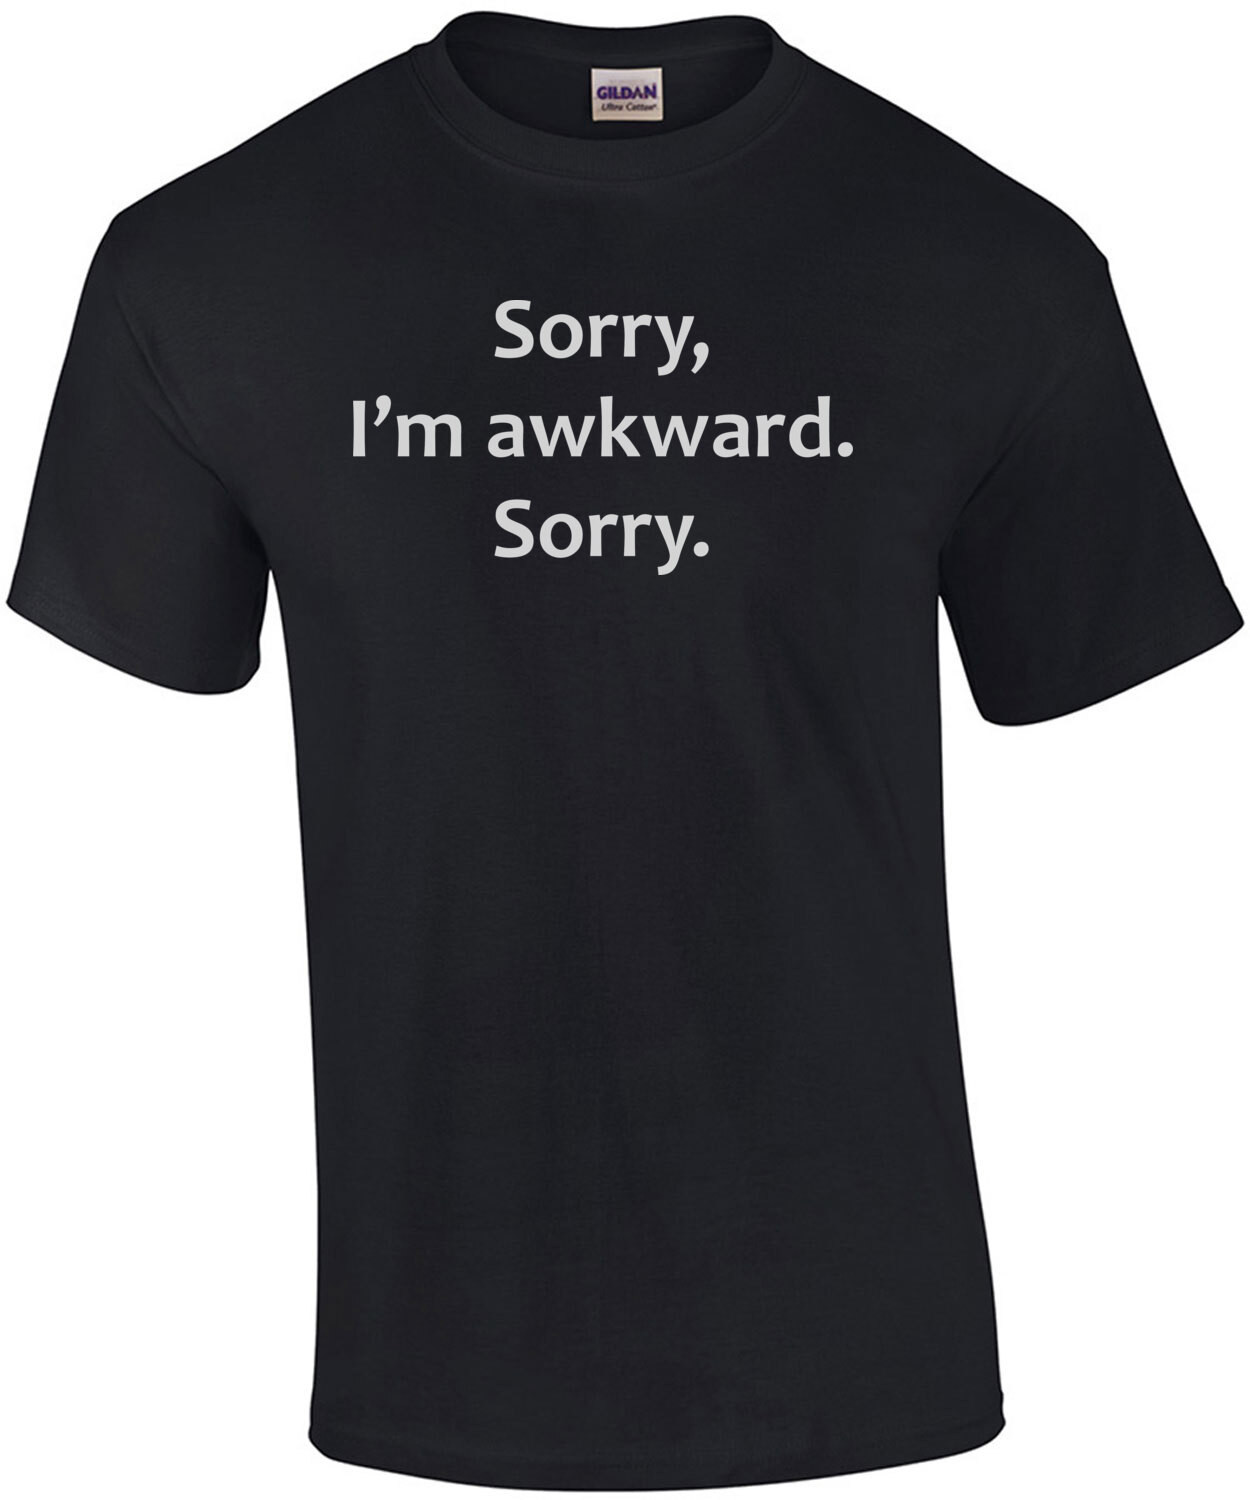 Sorry, I’m awkward. Sorry. Funny T-Shirt